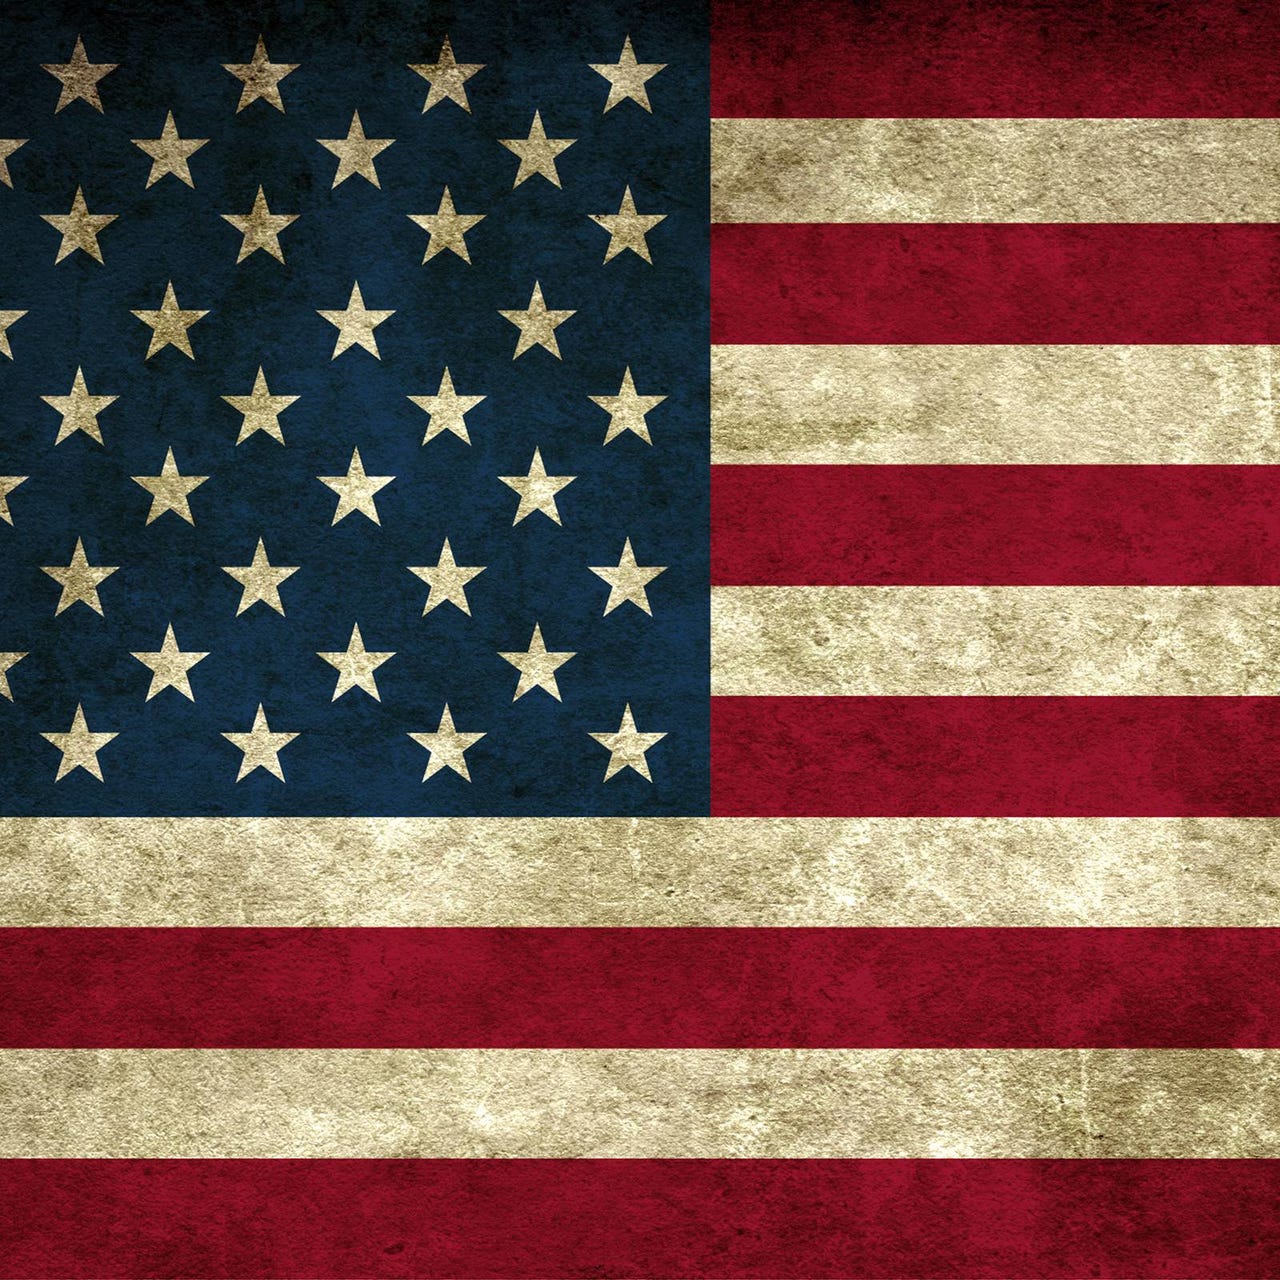 For God & Country - Faith, Inspiration & American Patriotism